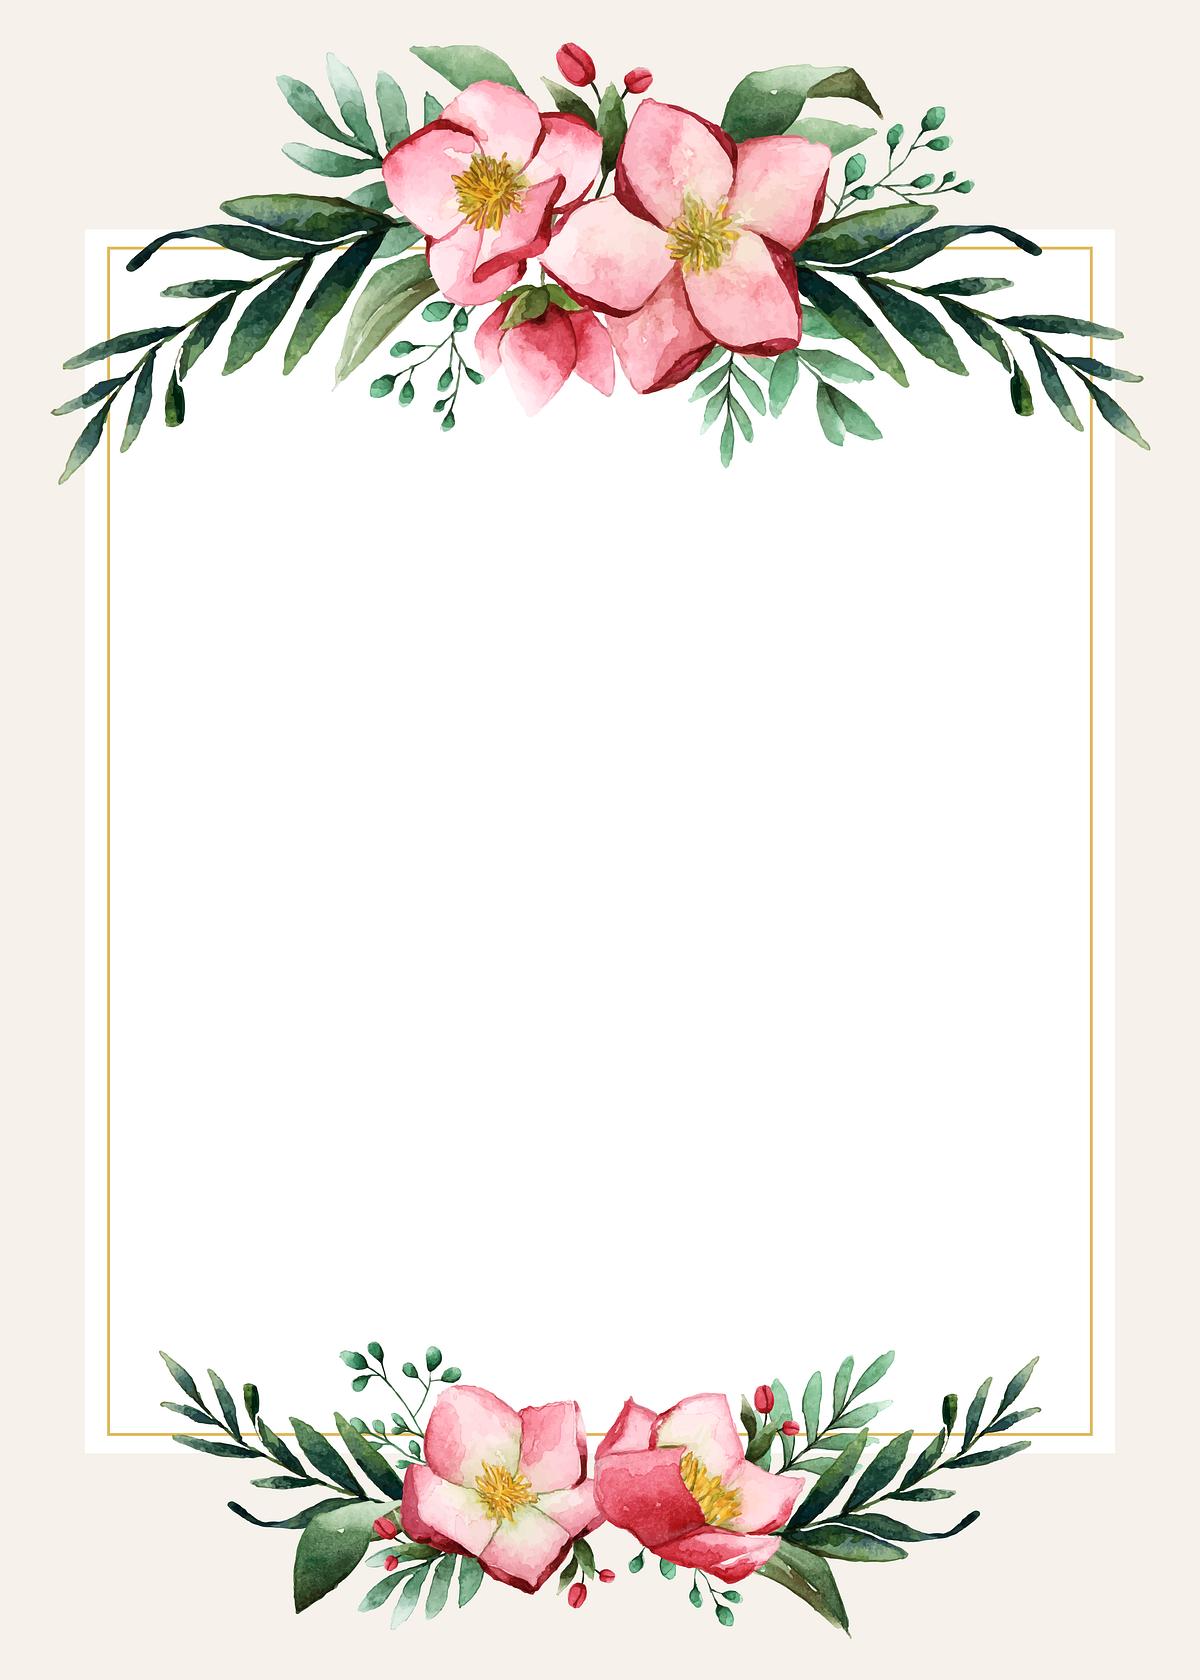 Wedding card design | Royalty free stock illustration - 679714